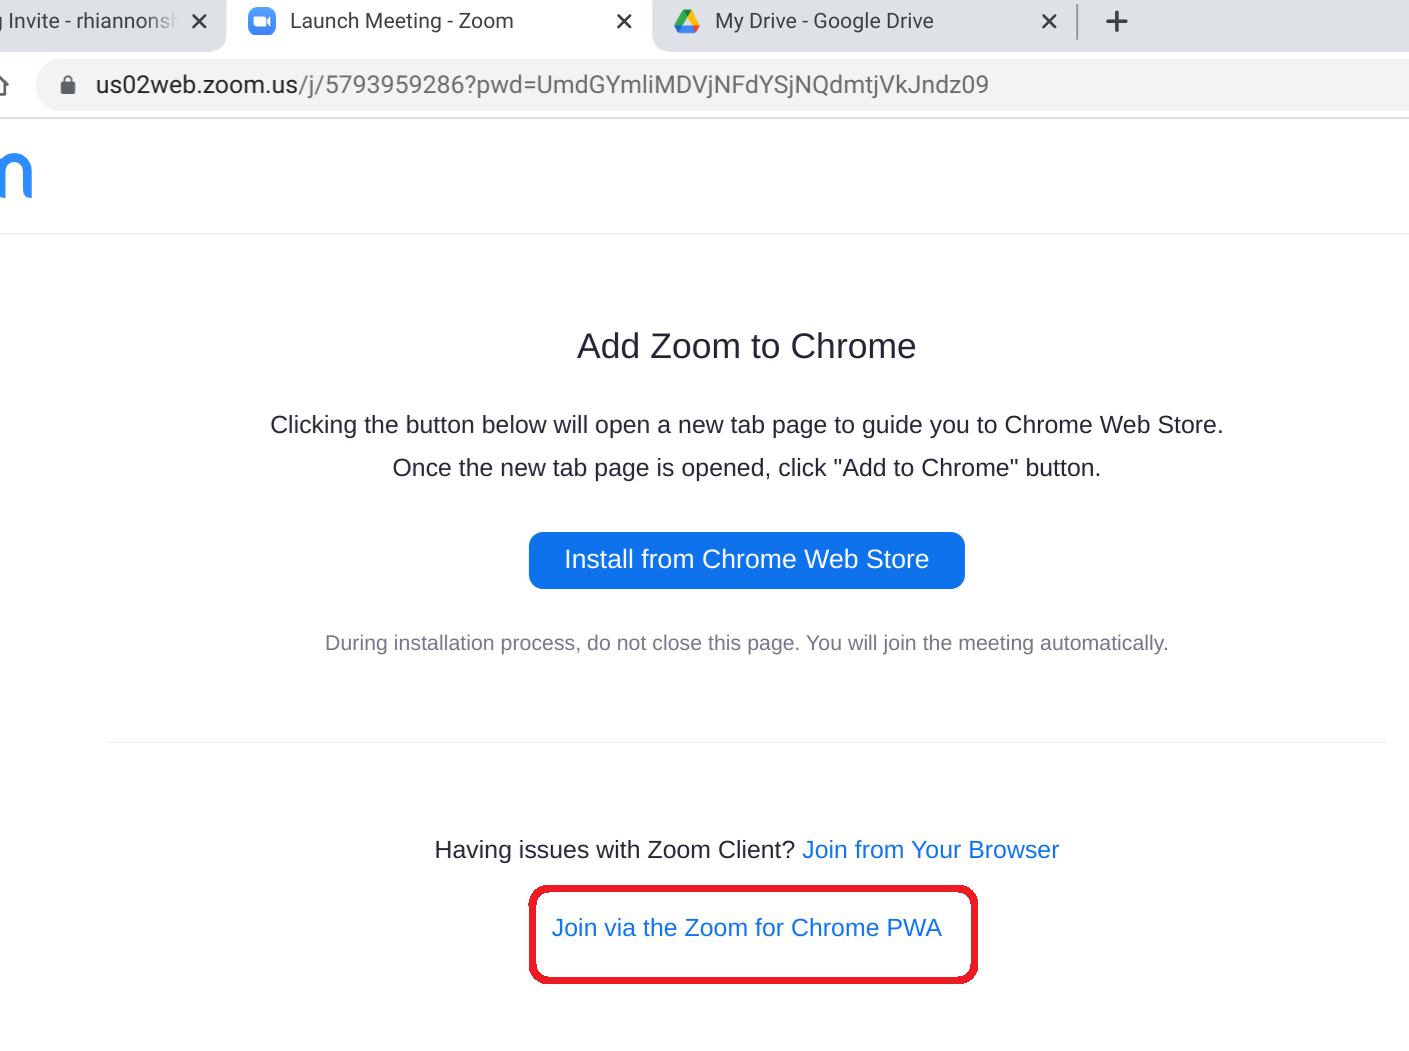 Zoom for Chrome Progressive Web App